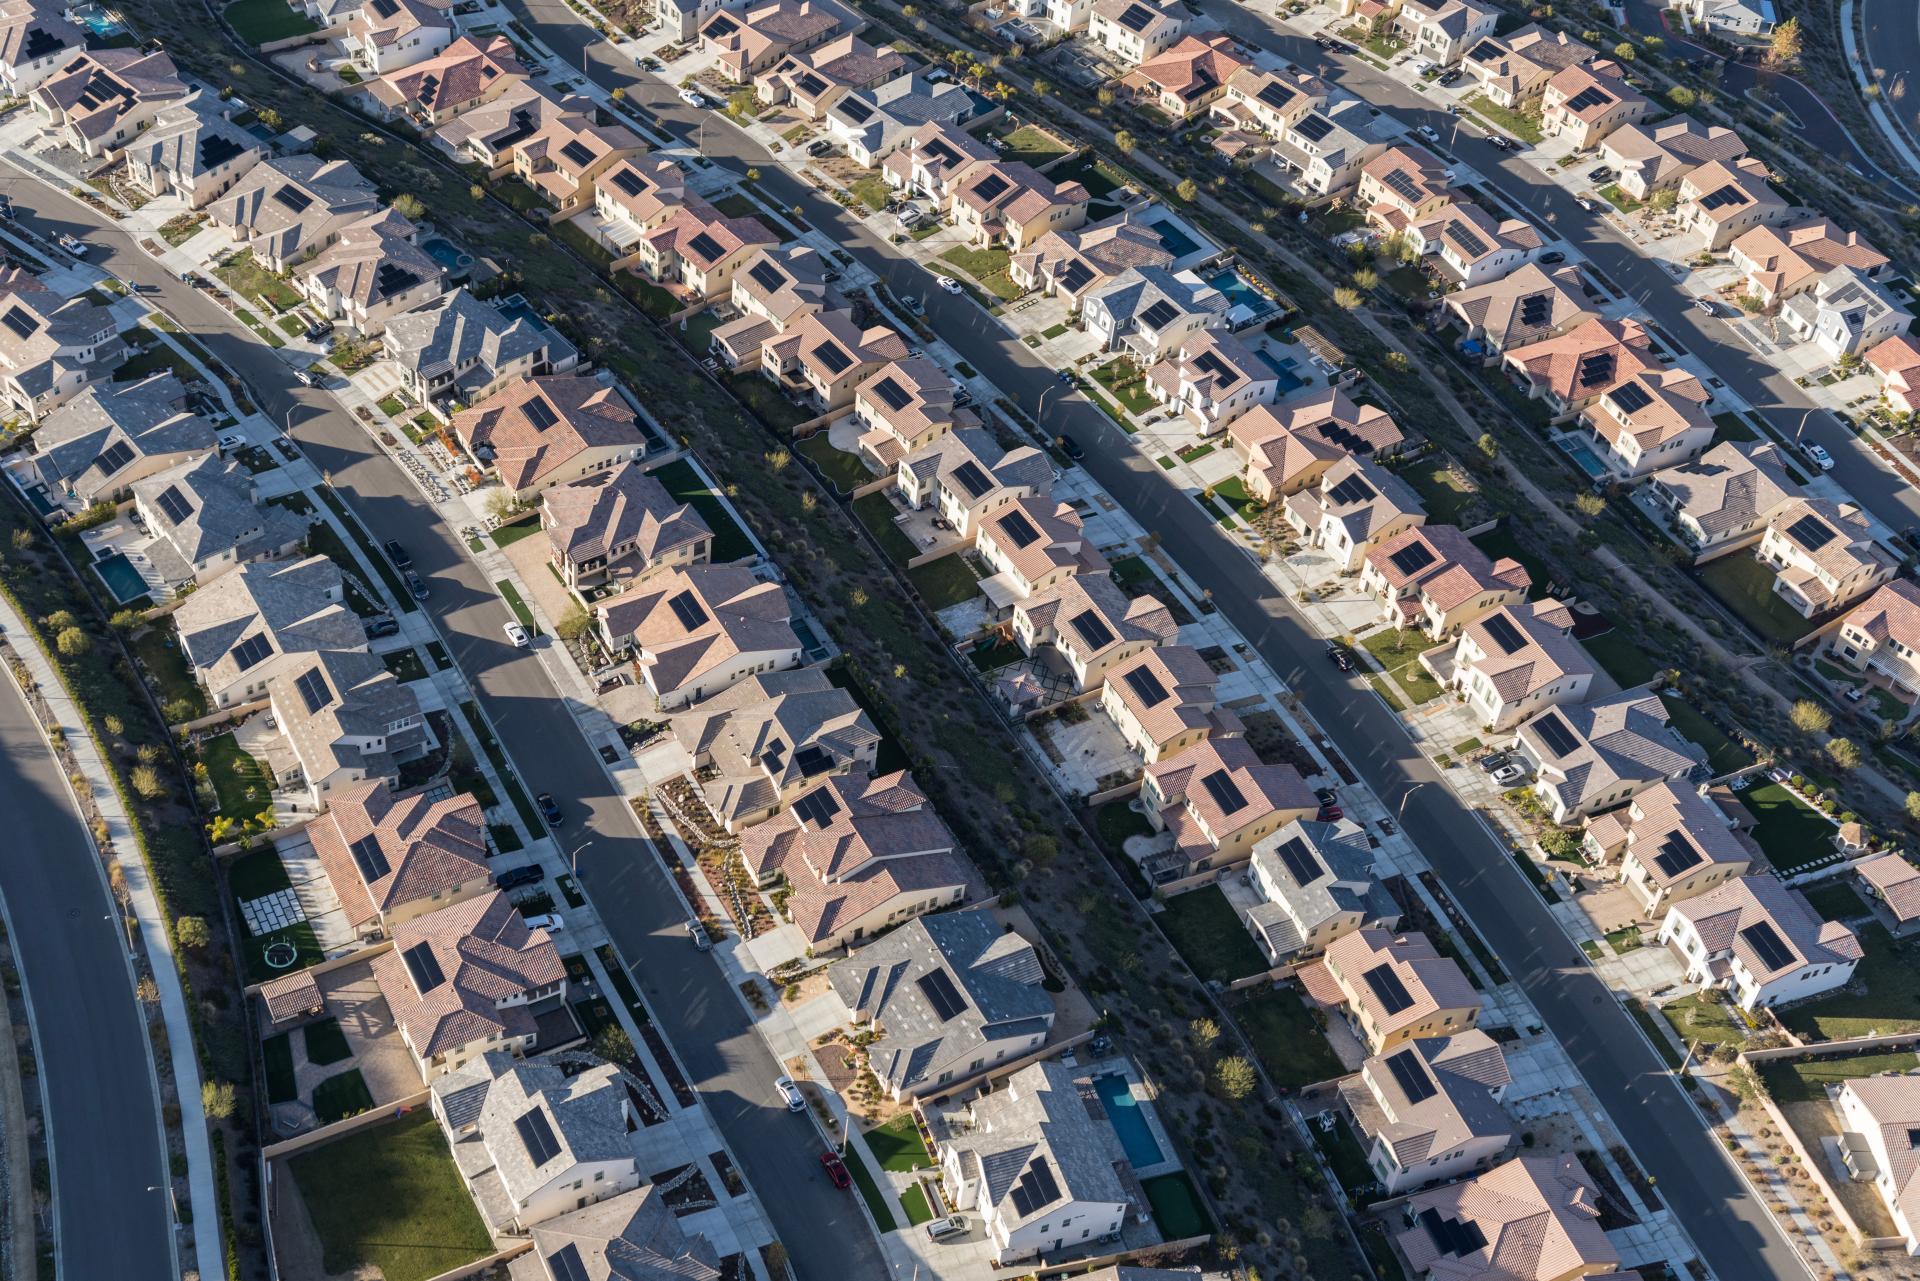 Homes with rooftop solar in Santa Clarita, California.